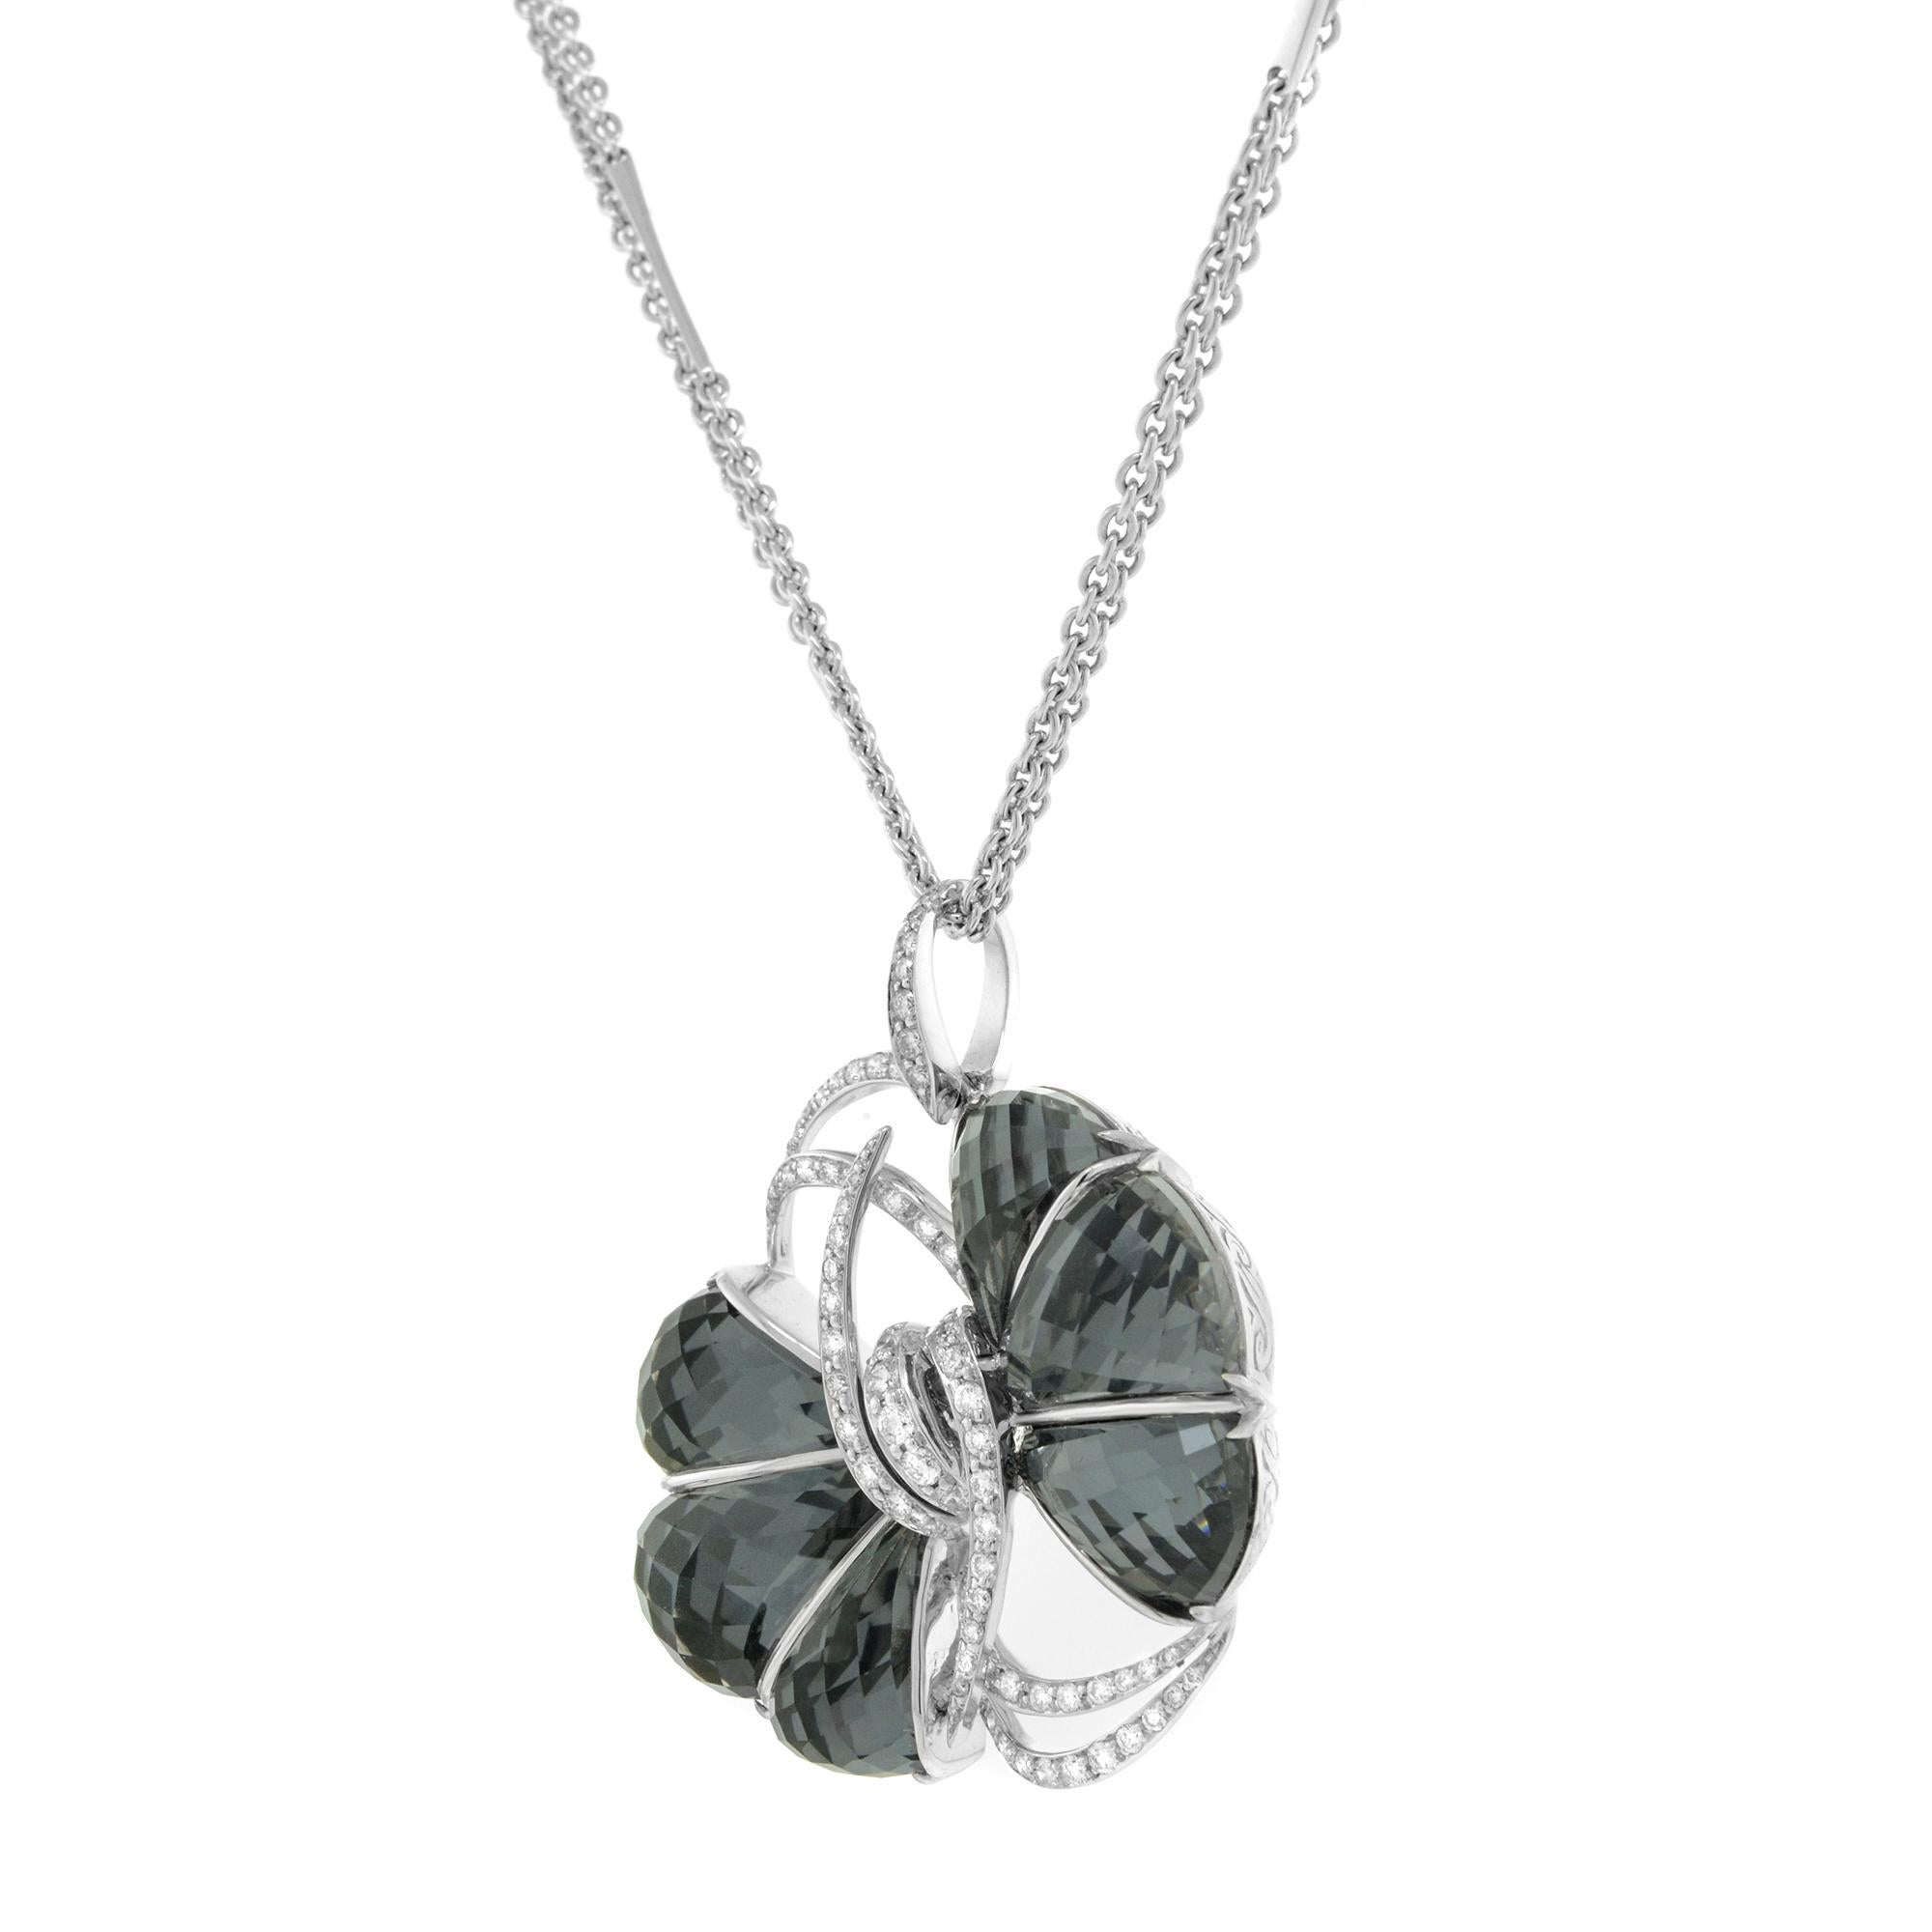 Modern Stephen Webster Diamond Quartz Ladies Pendant Necklace 18k White Gold 1.07Cttw For Sale